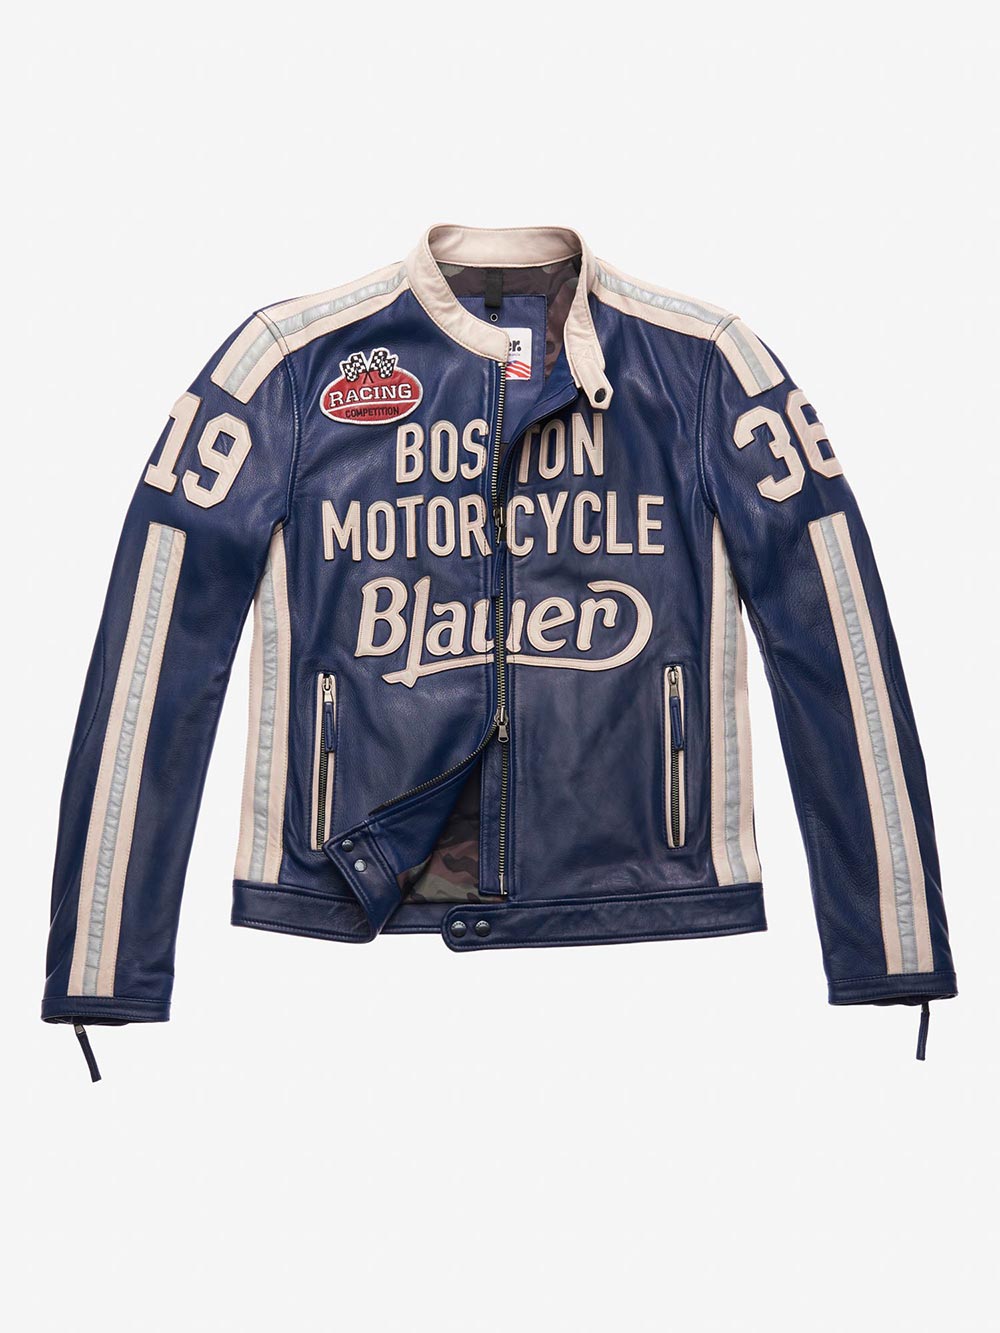 Blouson Cuir Moto Homme, Moto CE, Trike, Biker Veste, Bleu Vintage, Cafe  Racer